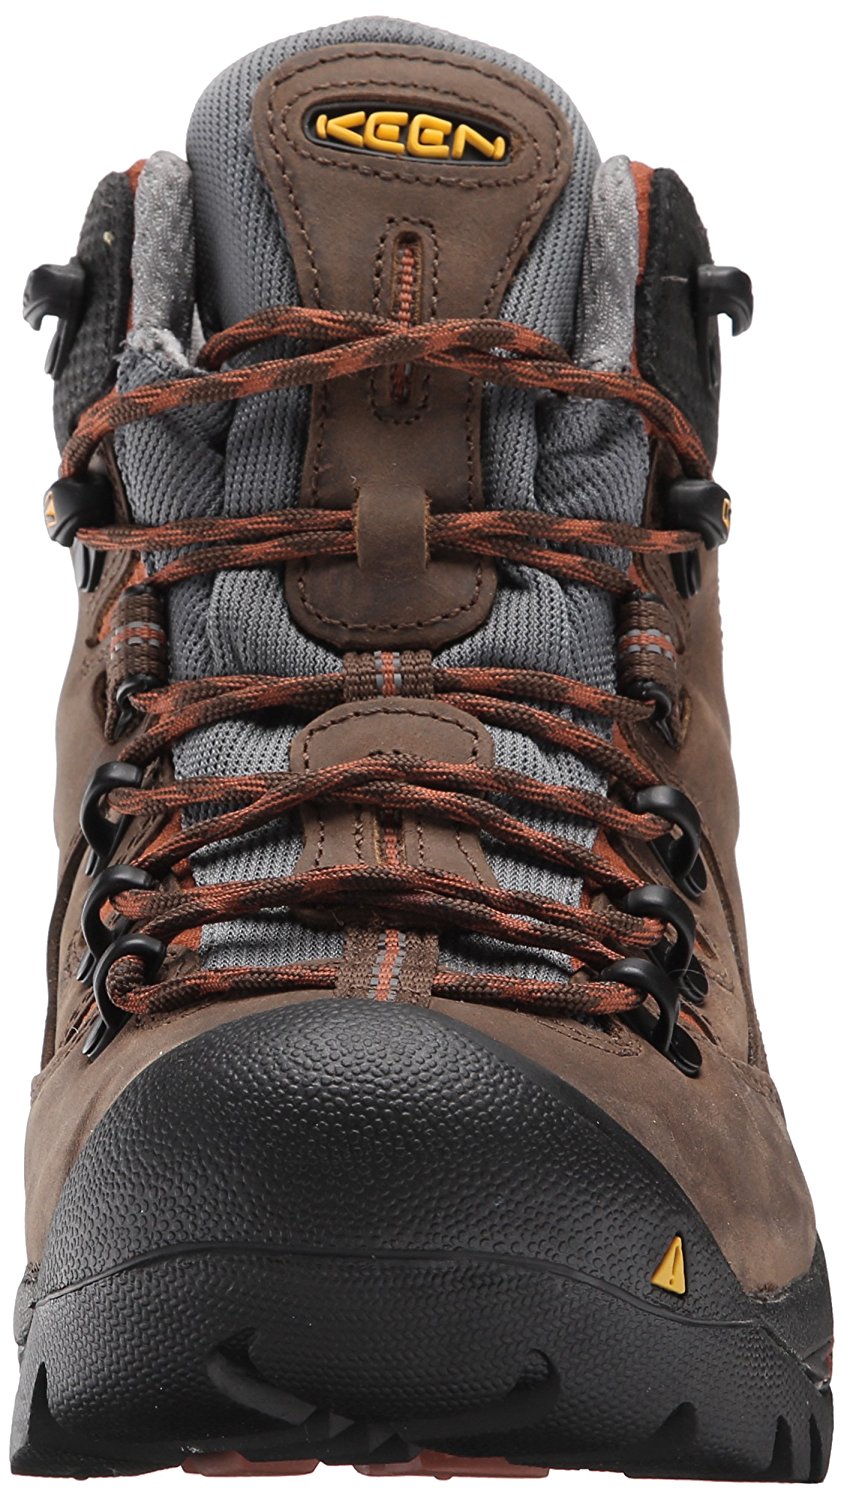 KEEN Utility Men's Pittsburgh Soft Toe Work Boot, Brown, Size 12.0 rMkO | eBay